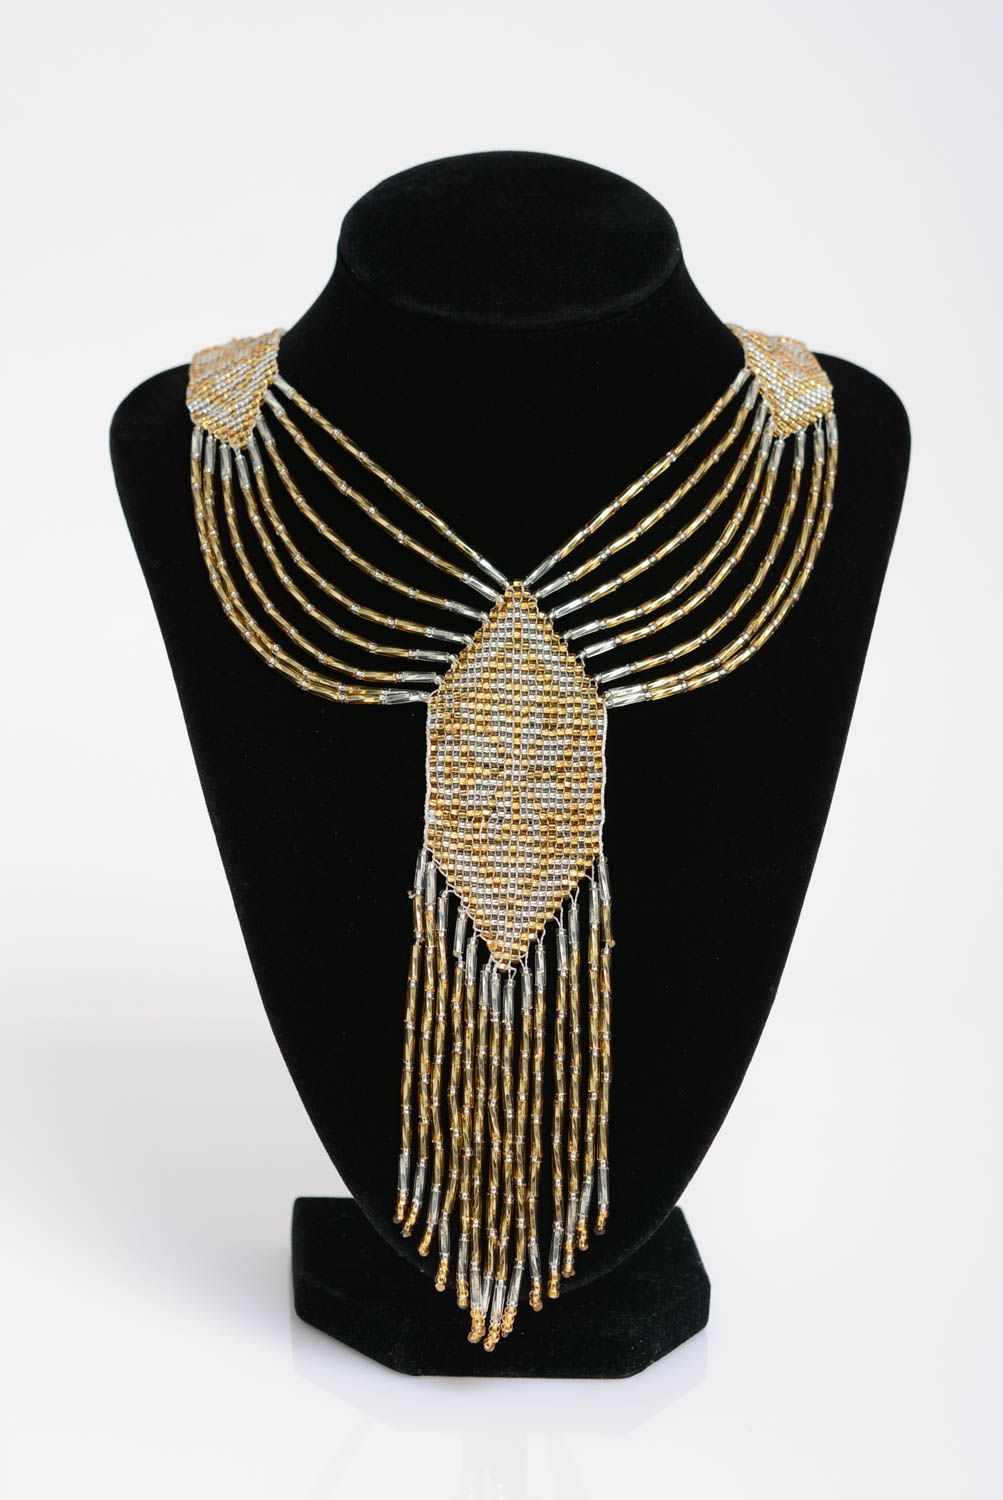 Beaded gerdan necklace handmade designer beautiful accessory in ethnic style photo 2